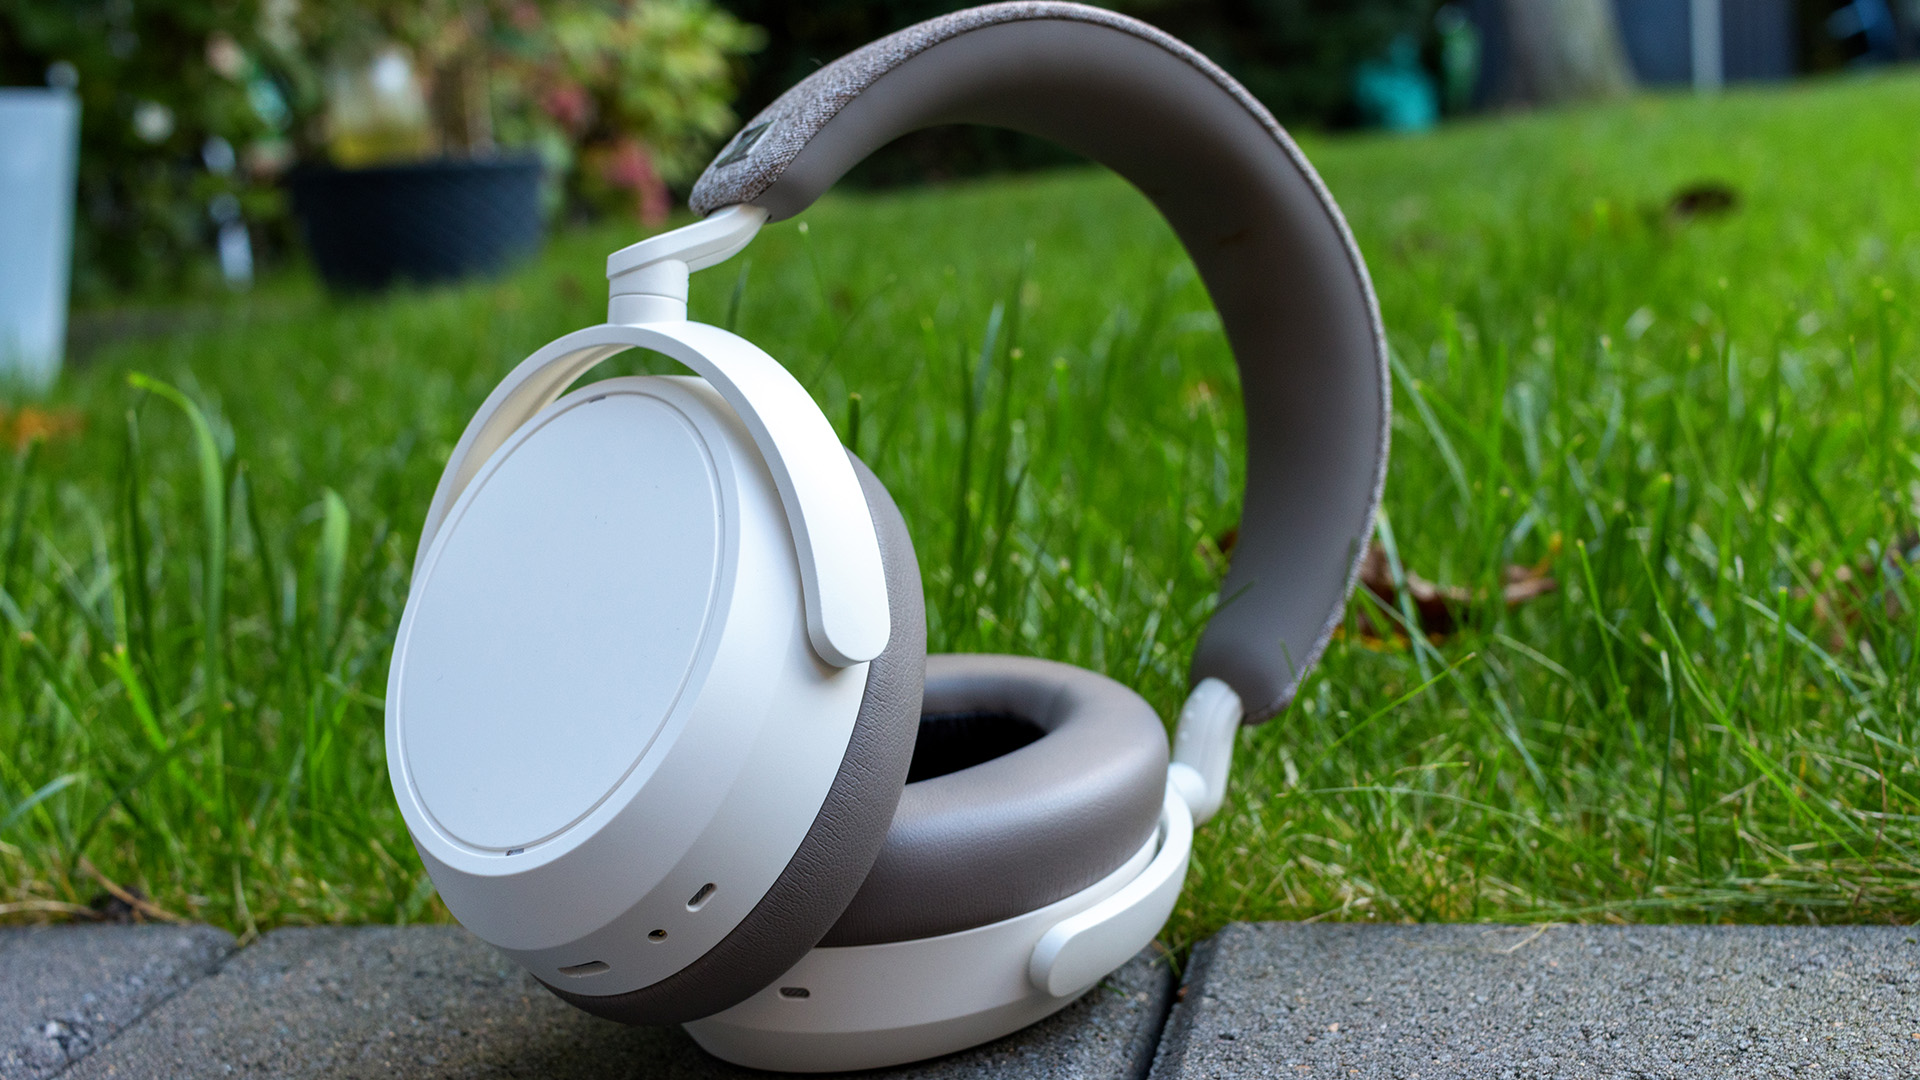 Sennheiser Momentum 4 Wireless Headphones on sale: Save $74 on these  noise-canceling over-the-ear headphones.